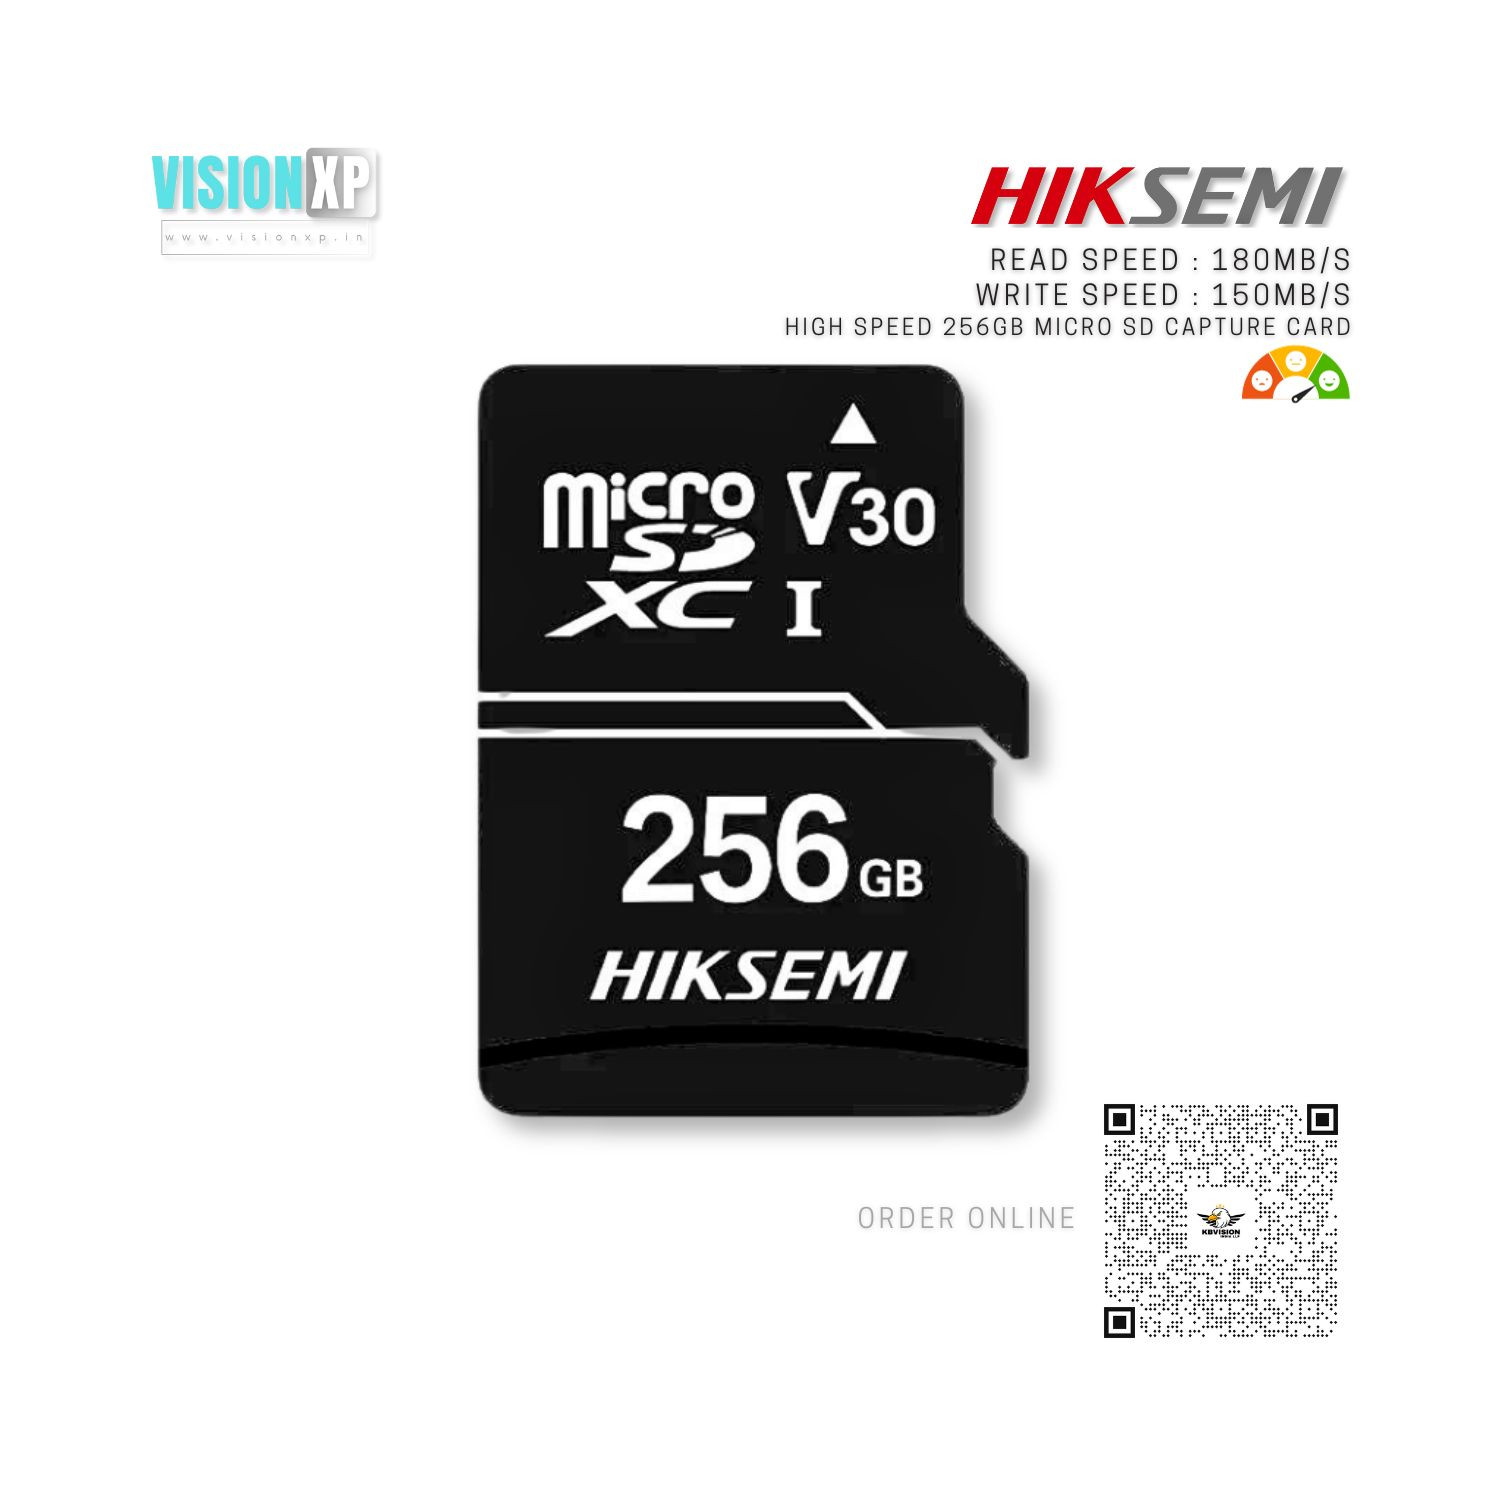 Hiksemi 256GB High Speed Capture Micro SD Card